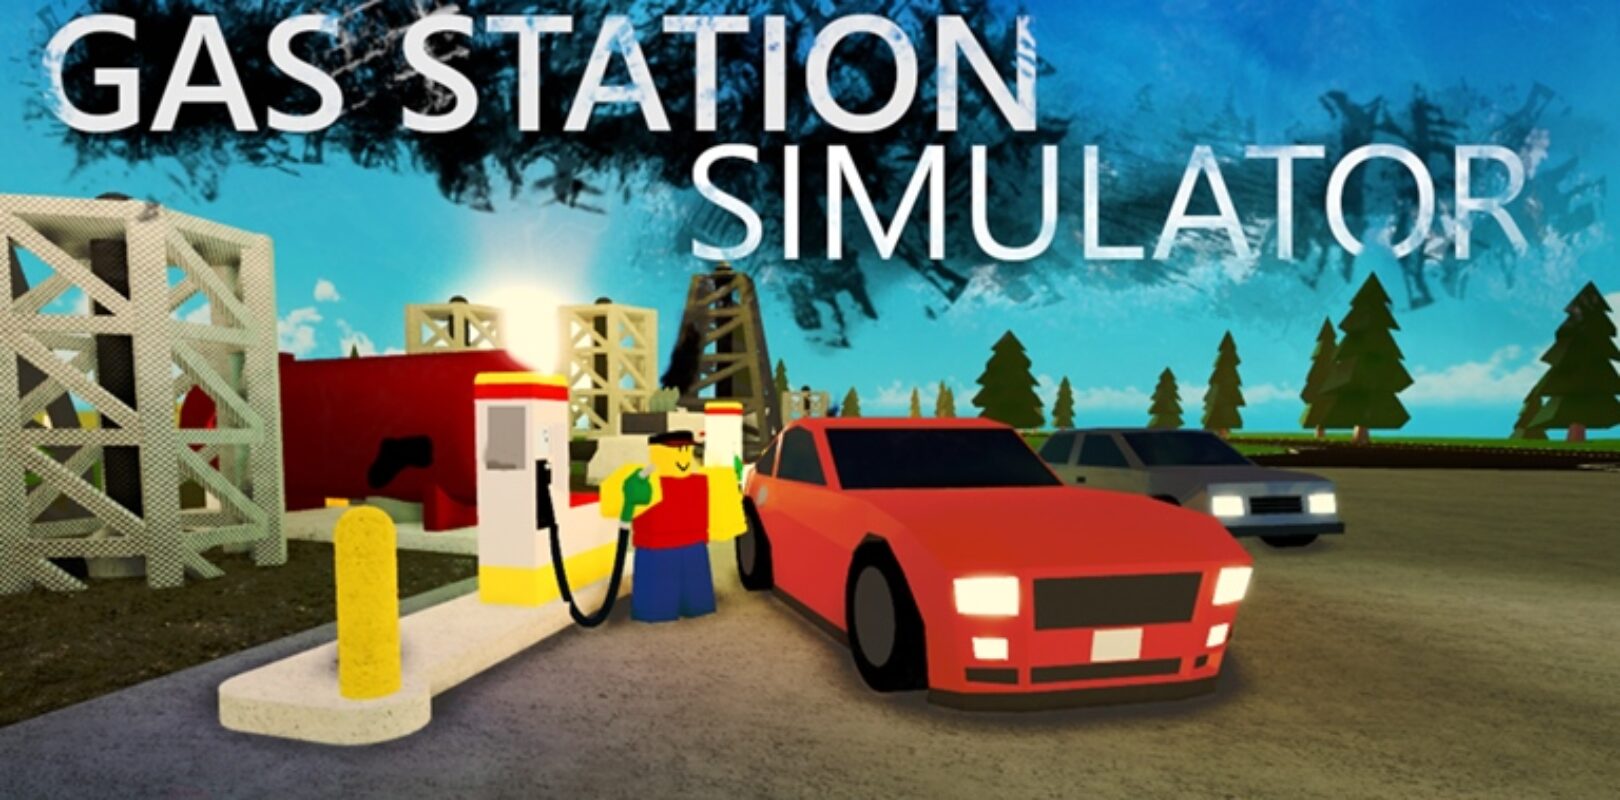 roblox gas station simulator 2 codes total of 10k november